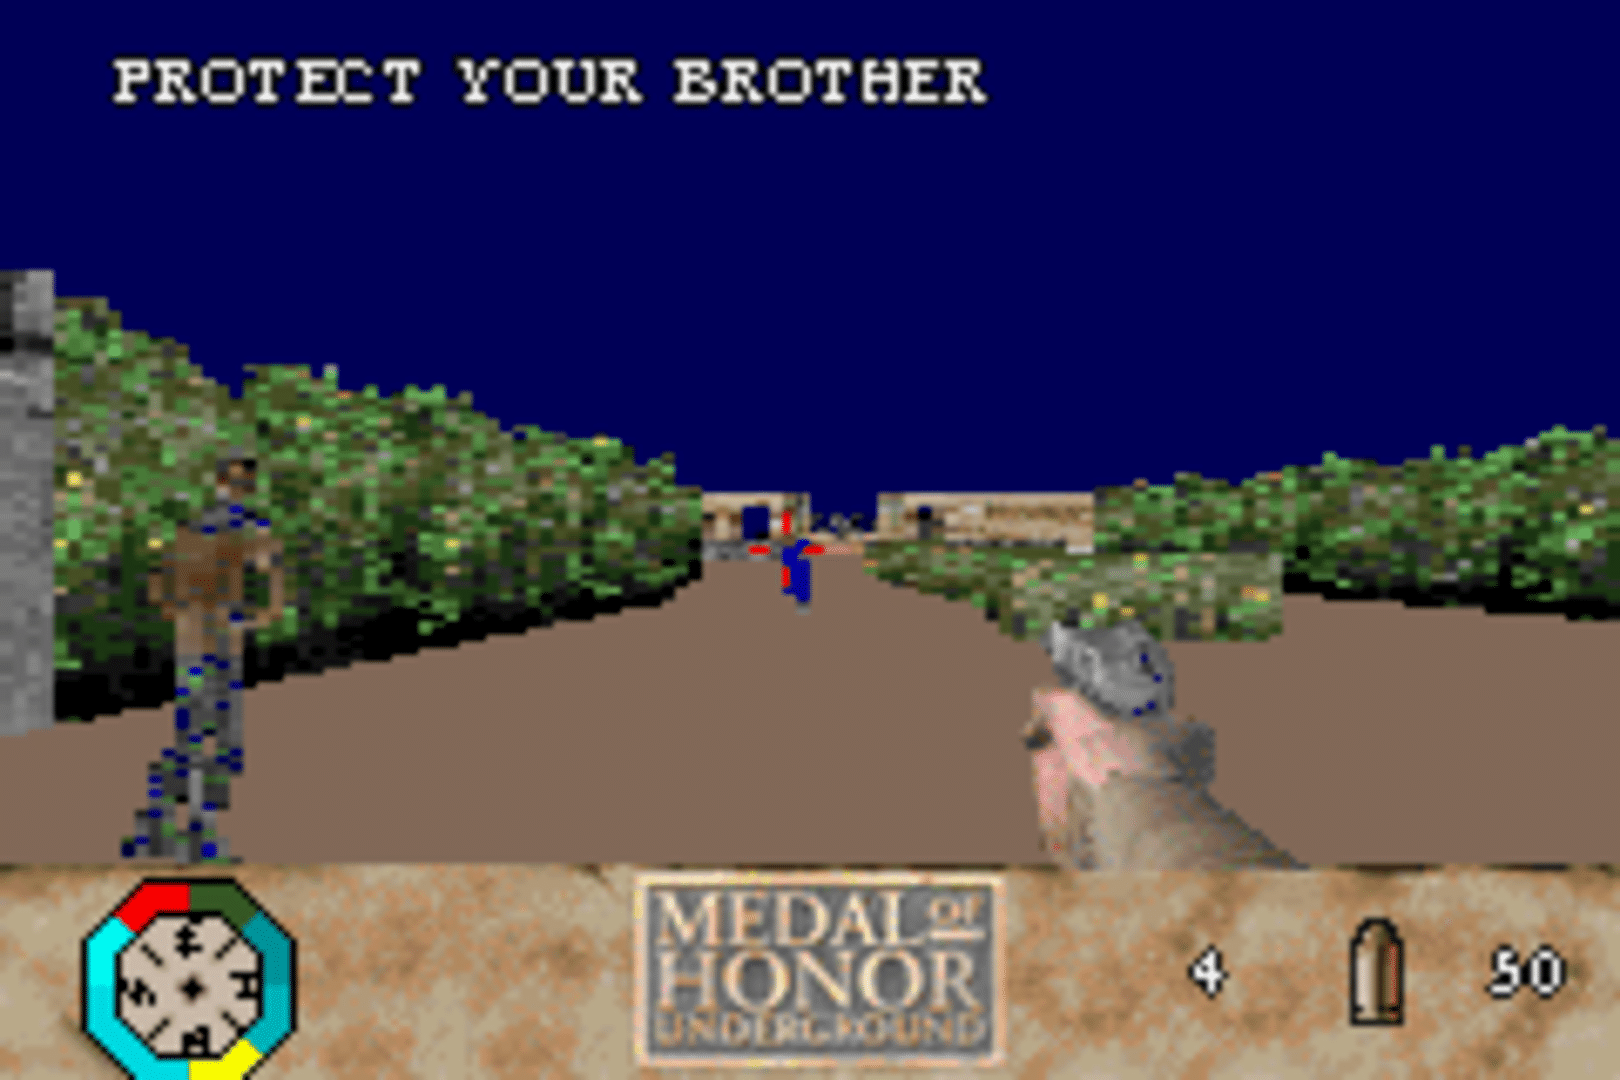 Medal of Honor: Underground screenshot